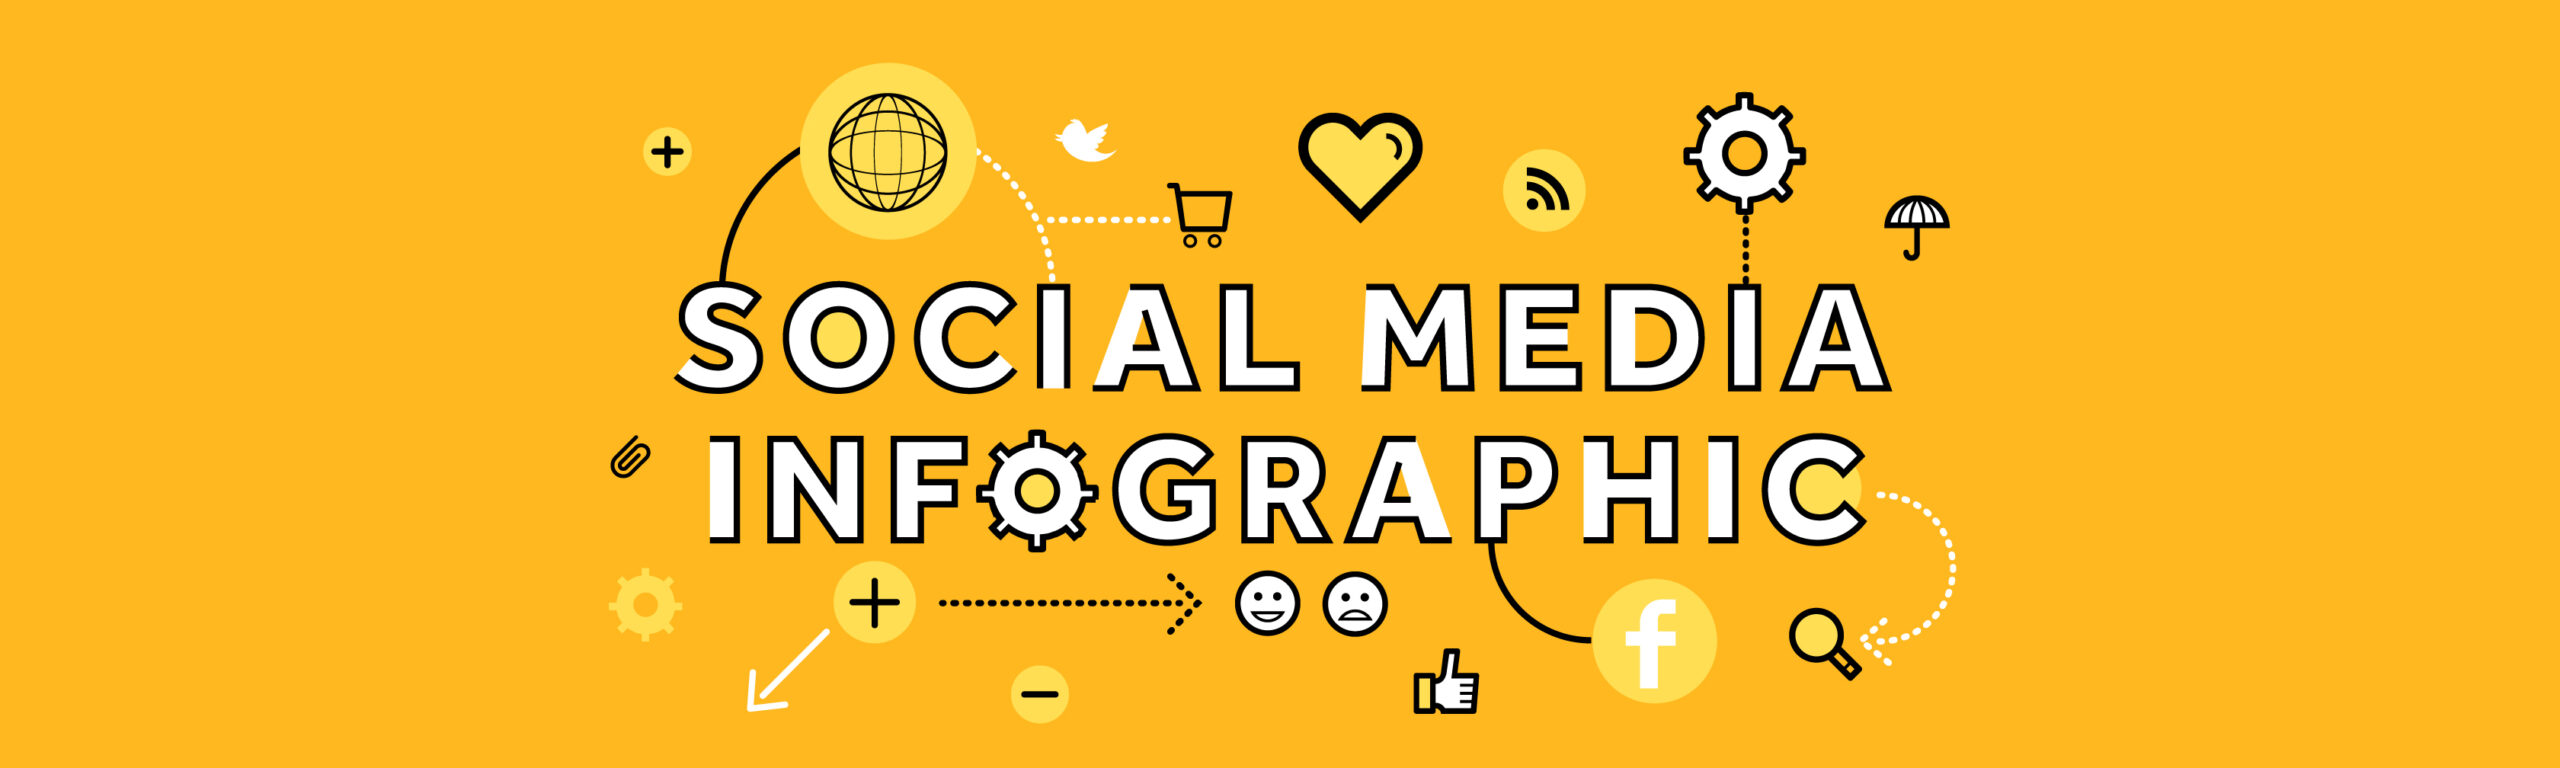 Social-Media-Infographic-big